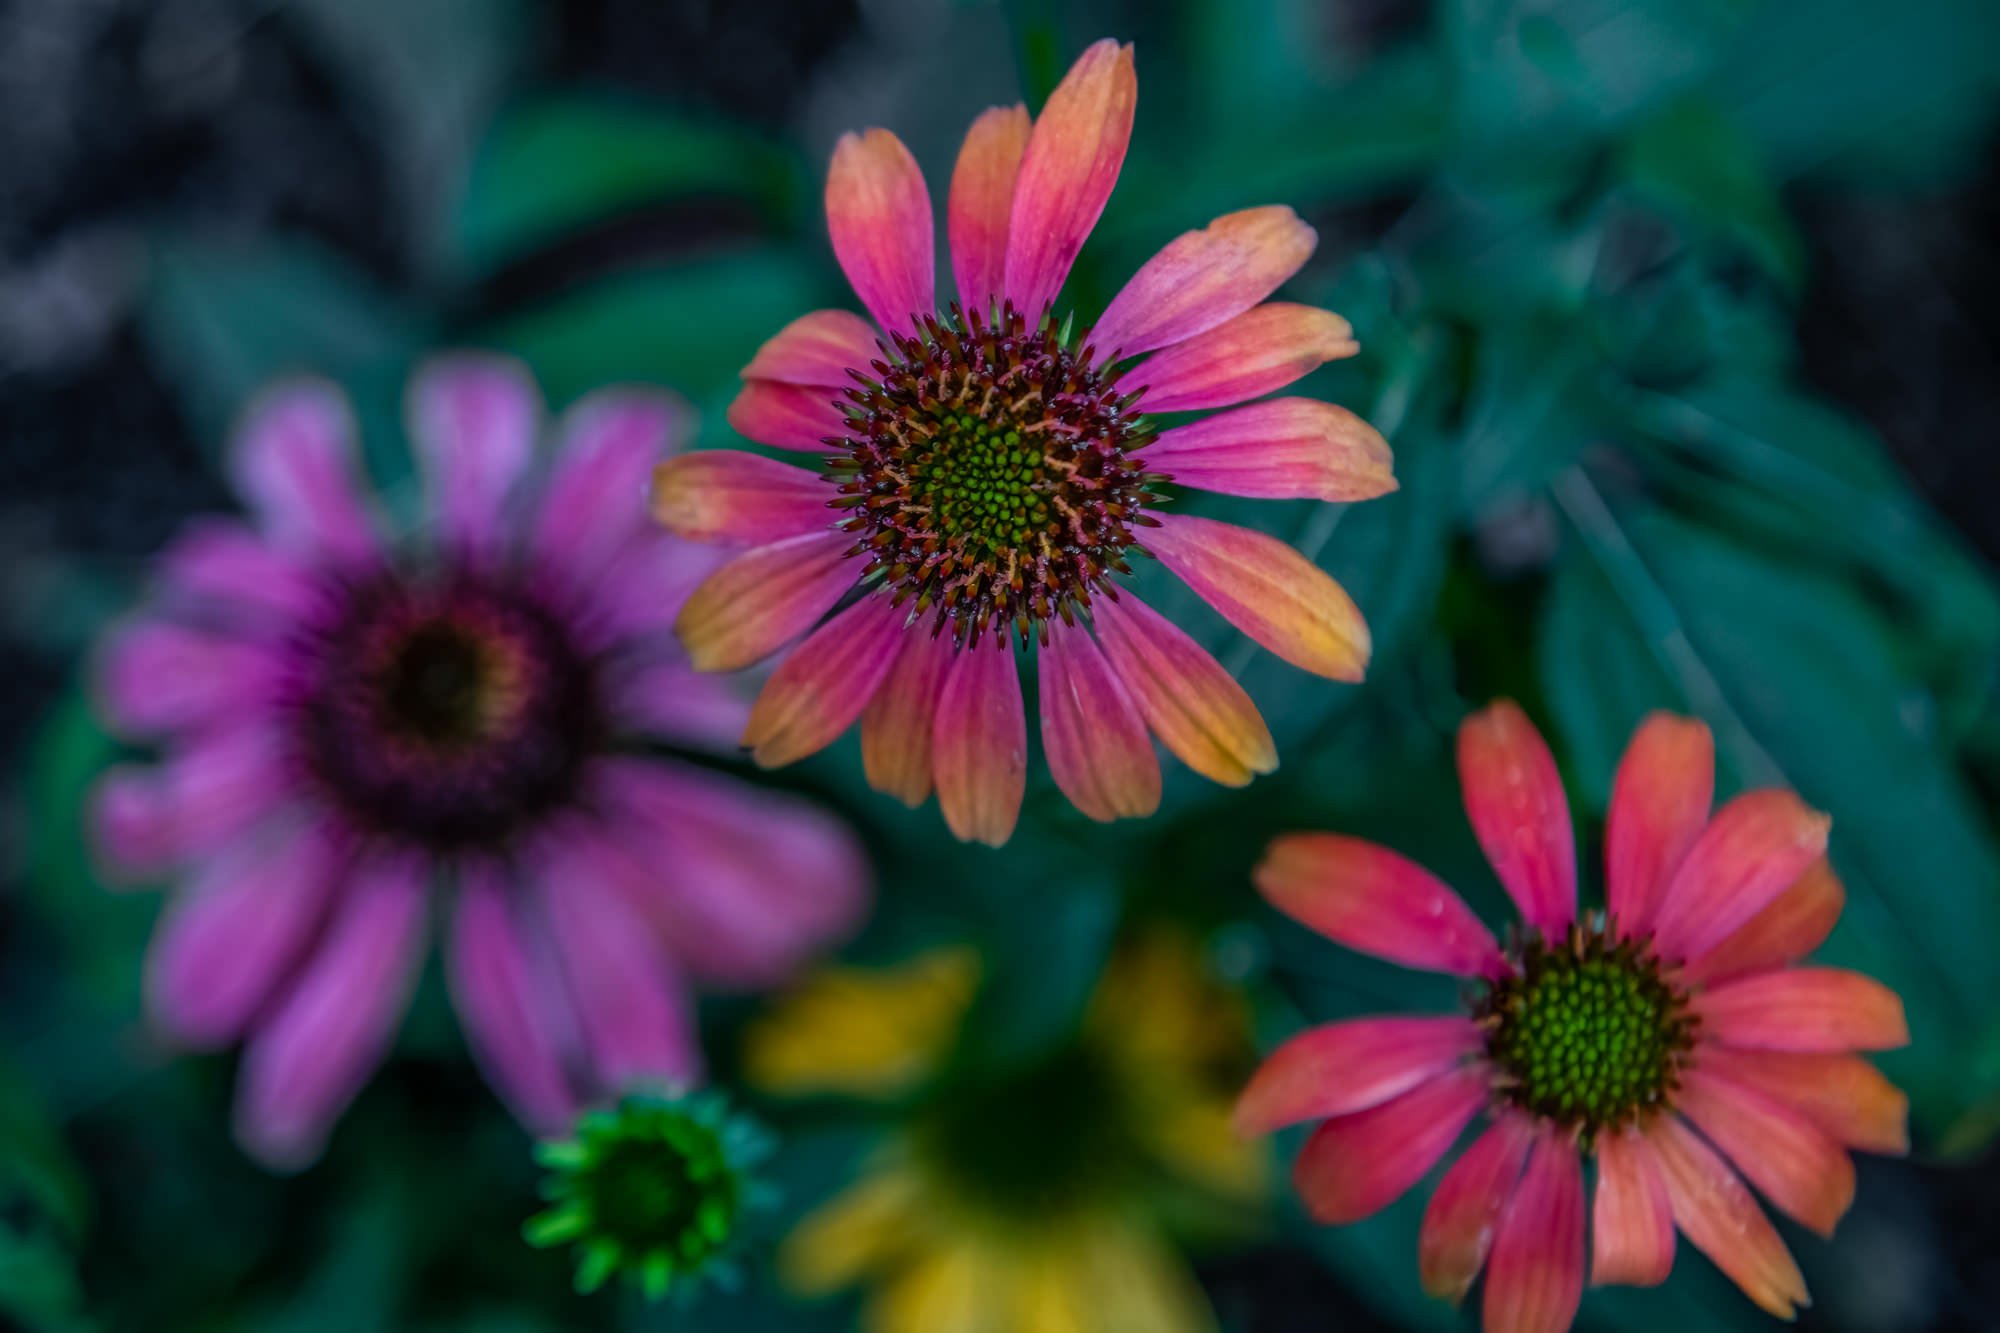 Nancy-Wright-photographer-testimonial-garden-flower-pink-orange-wpix-10-21-2020-4529-.JPG